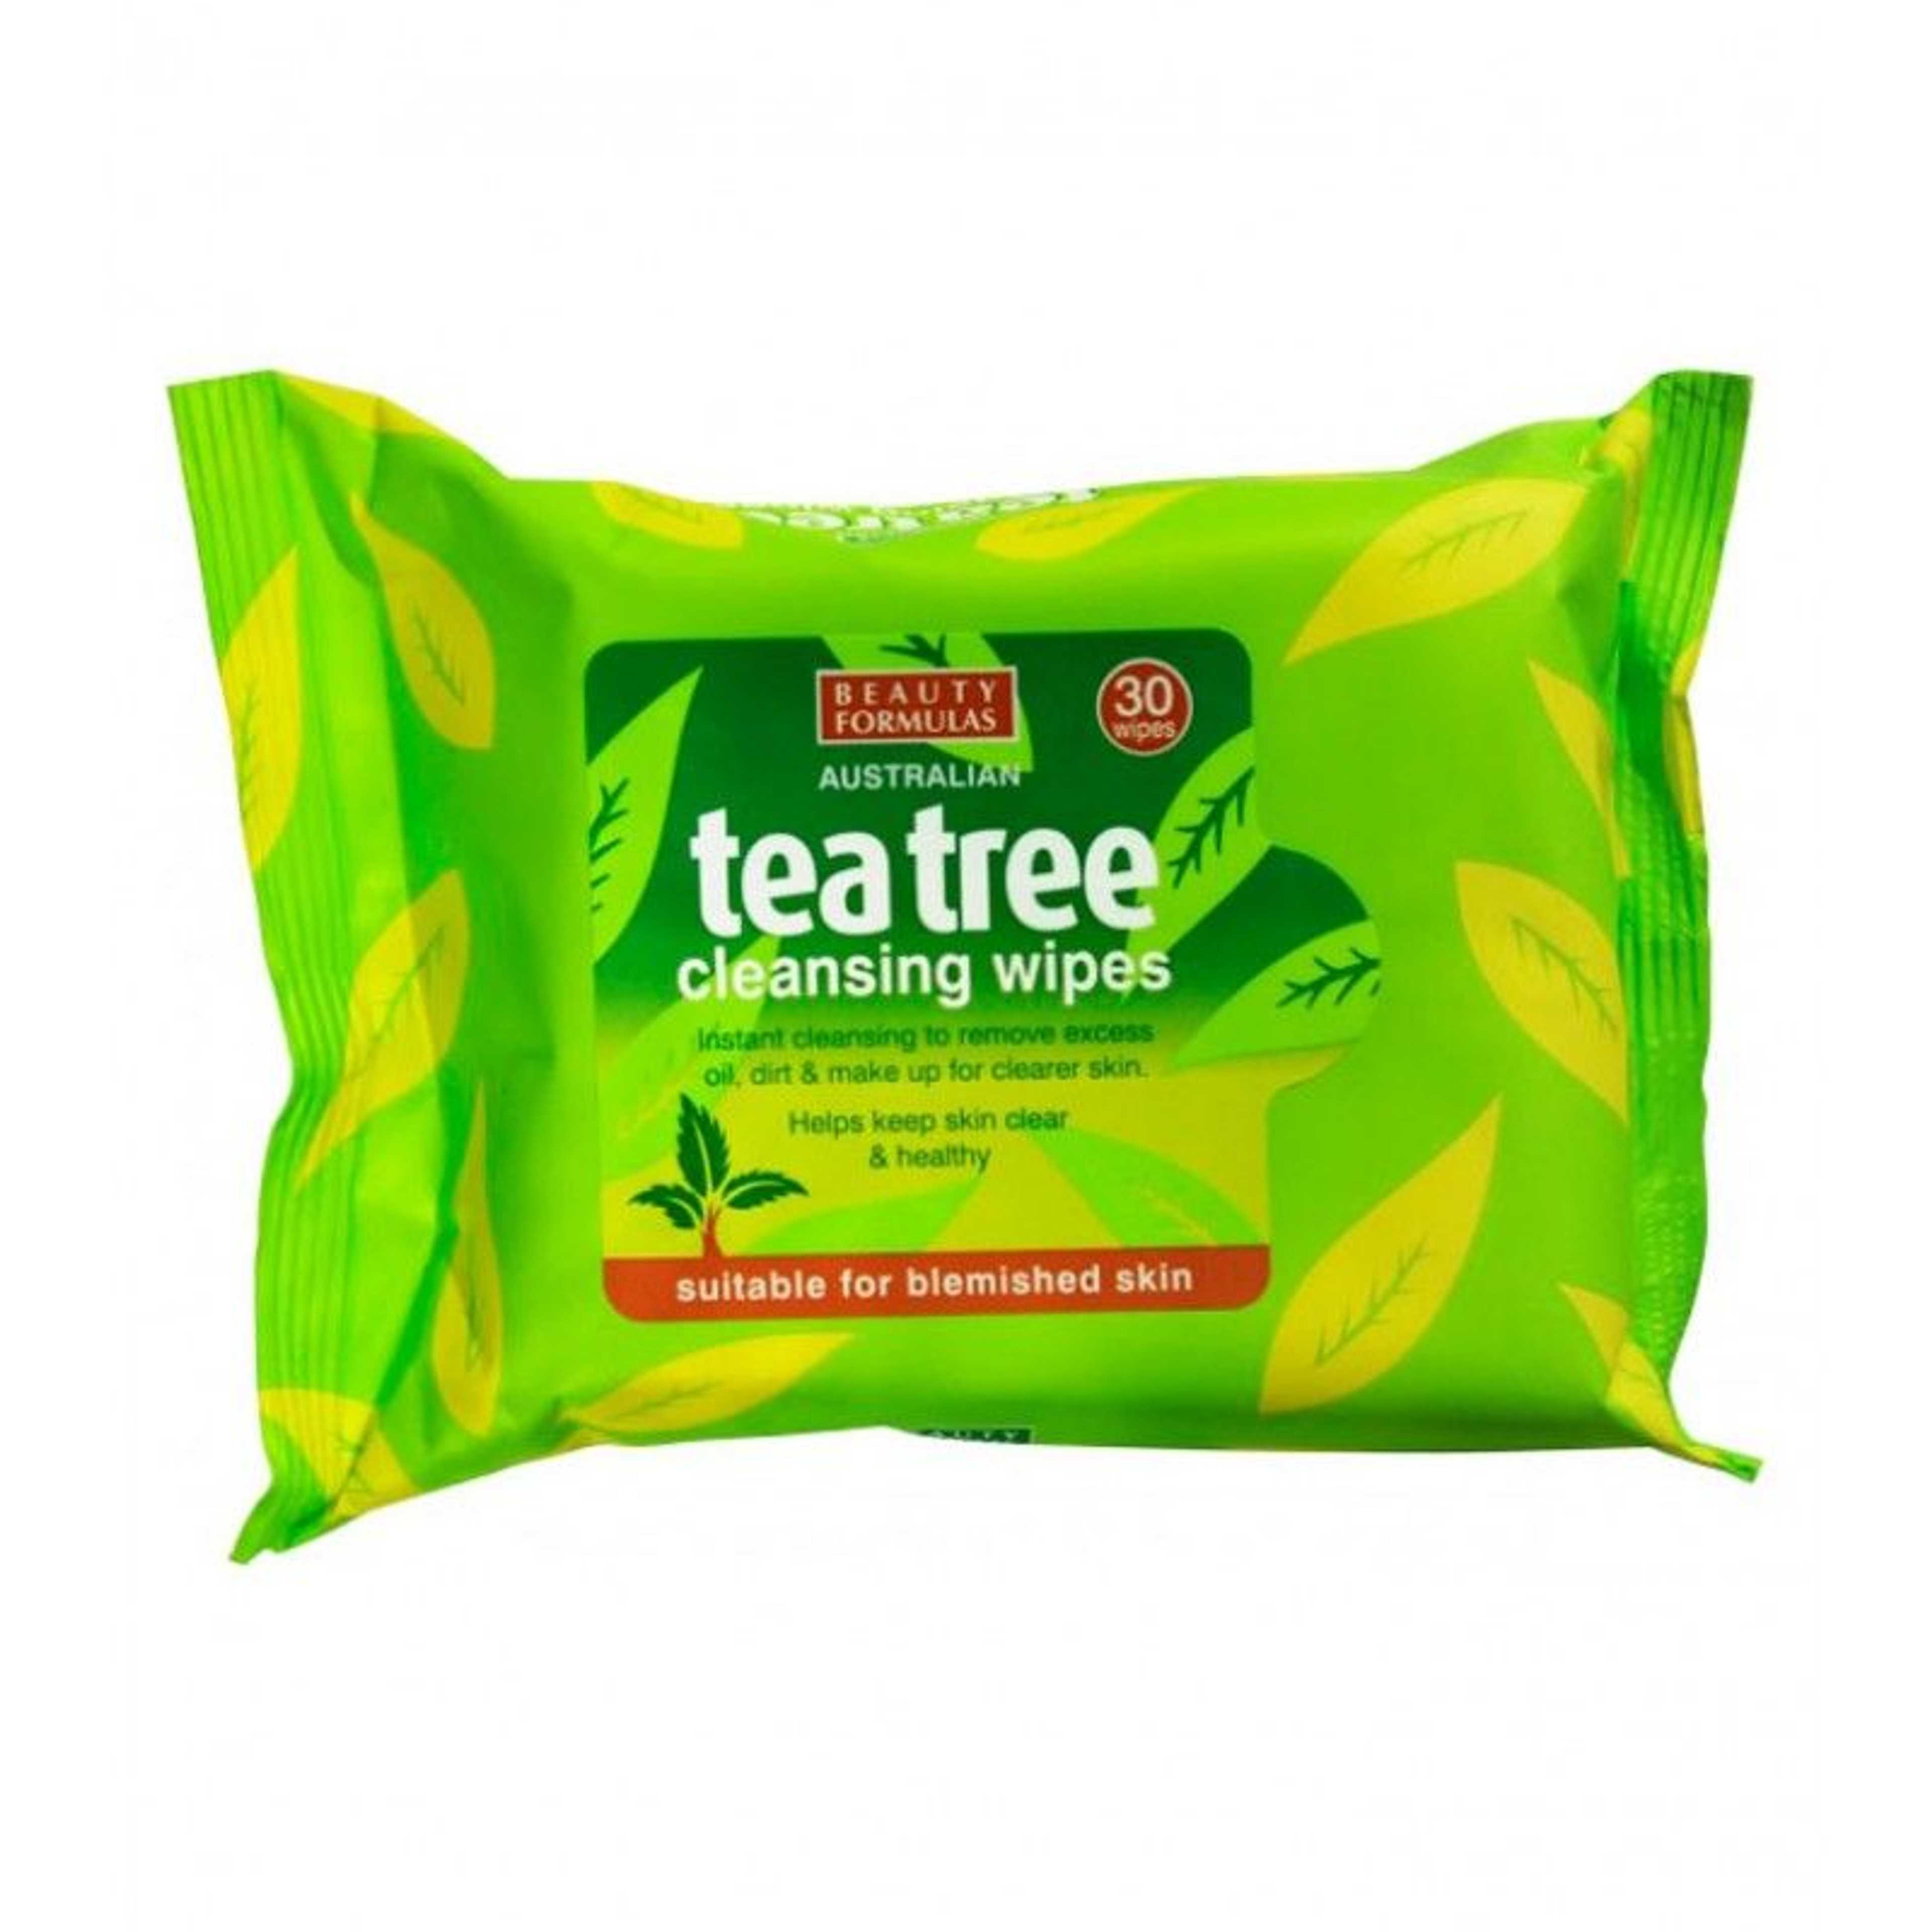 BEAUTY FORMULAS Tea Tree Cleansing Wipes